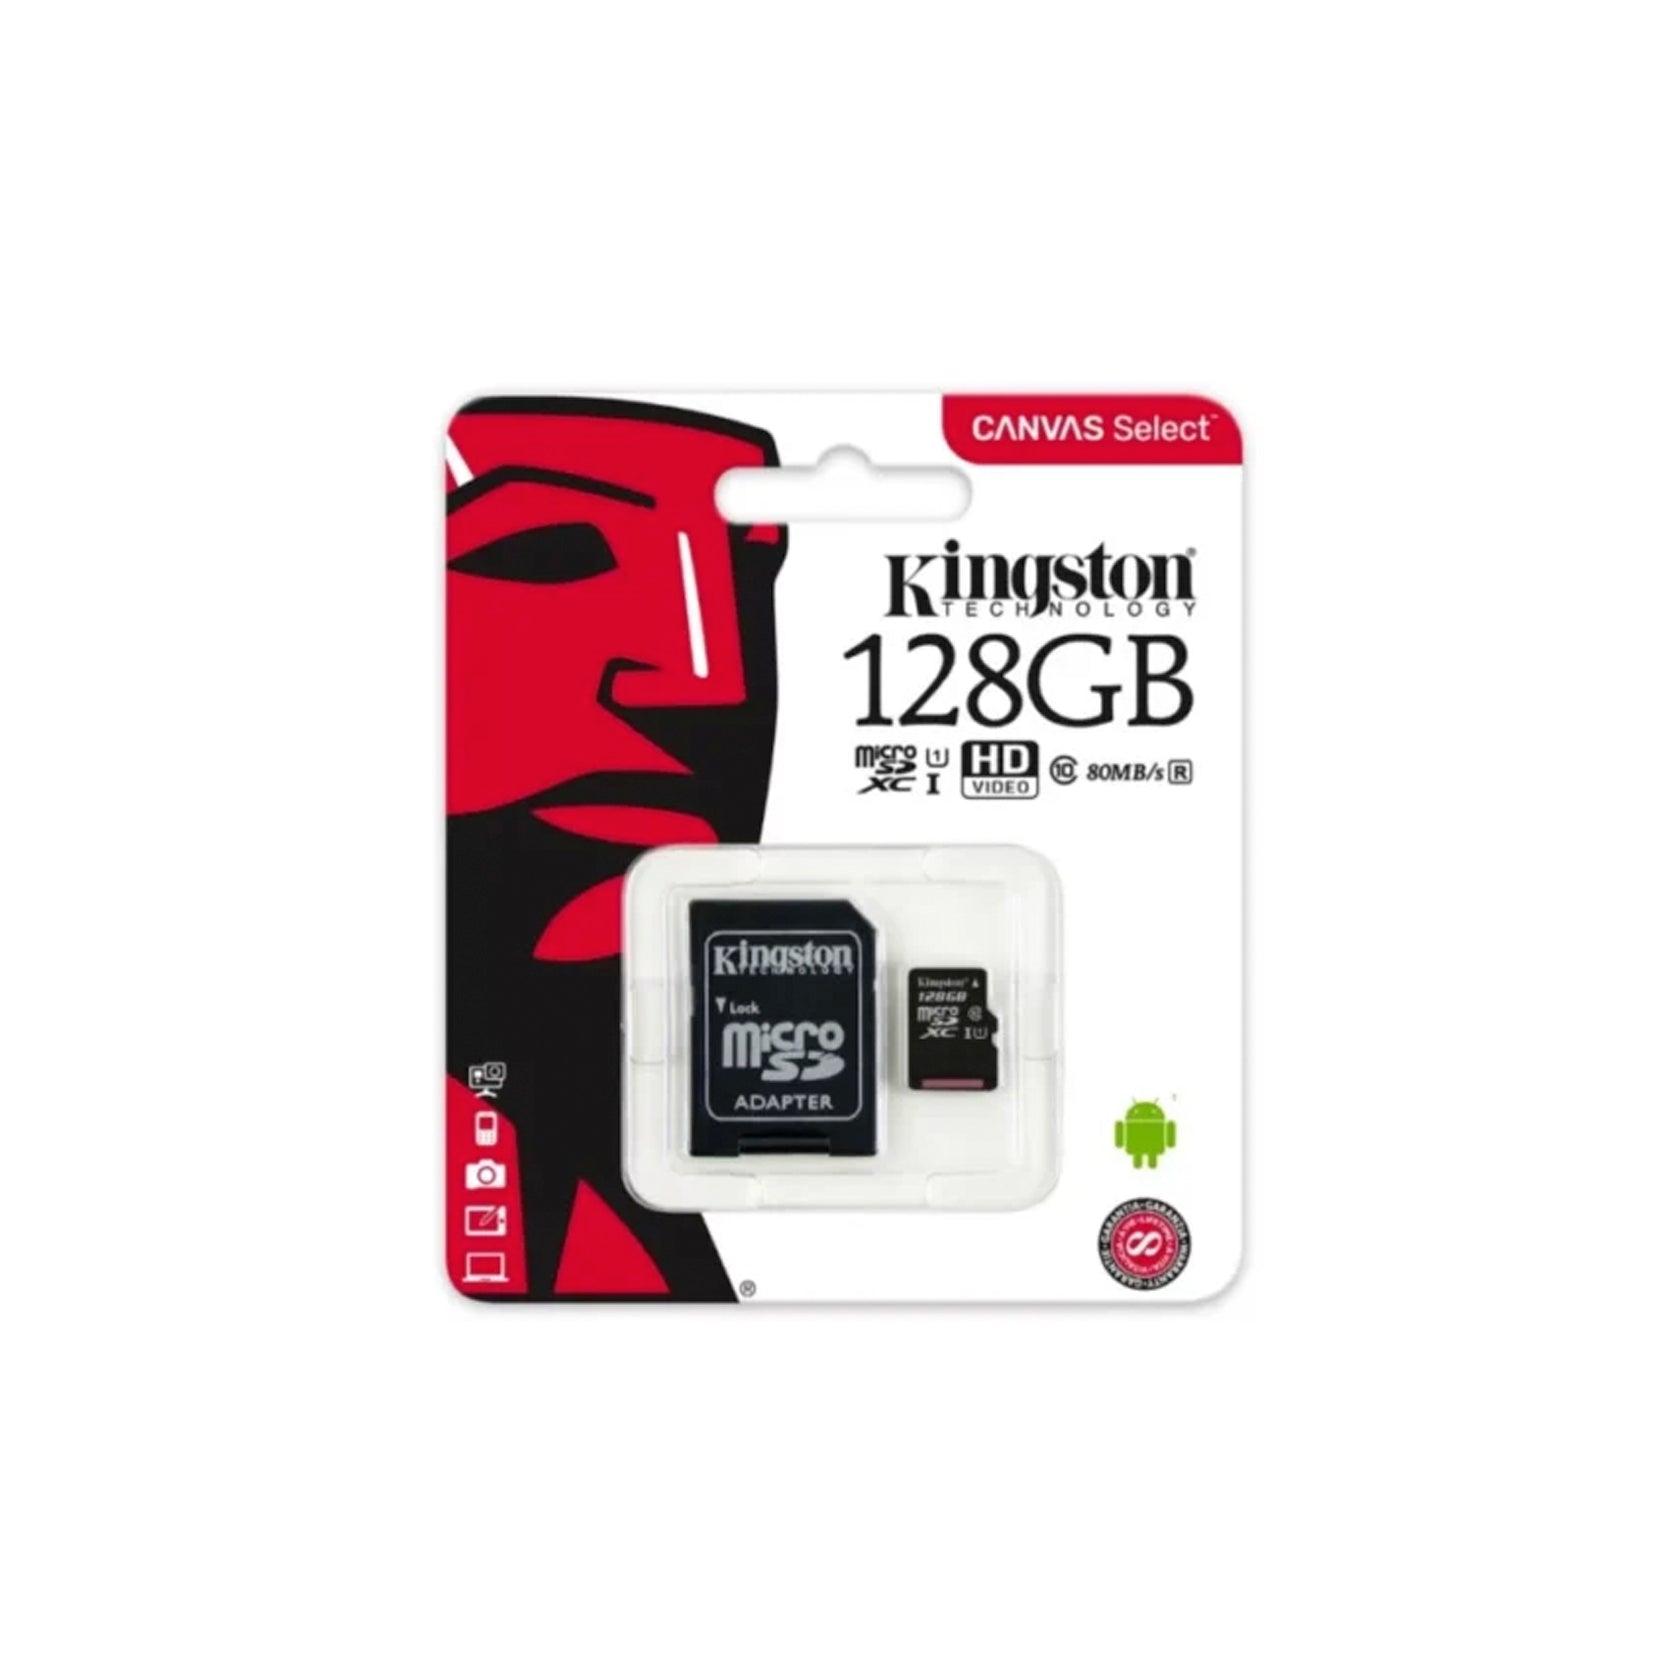 KINGSTON SD KORT 128GB C10 - Kosmos Renew